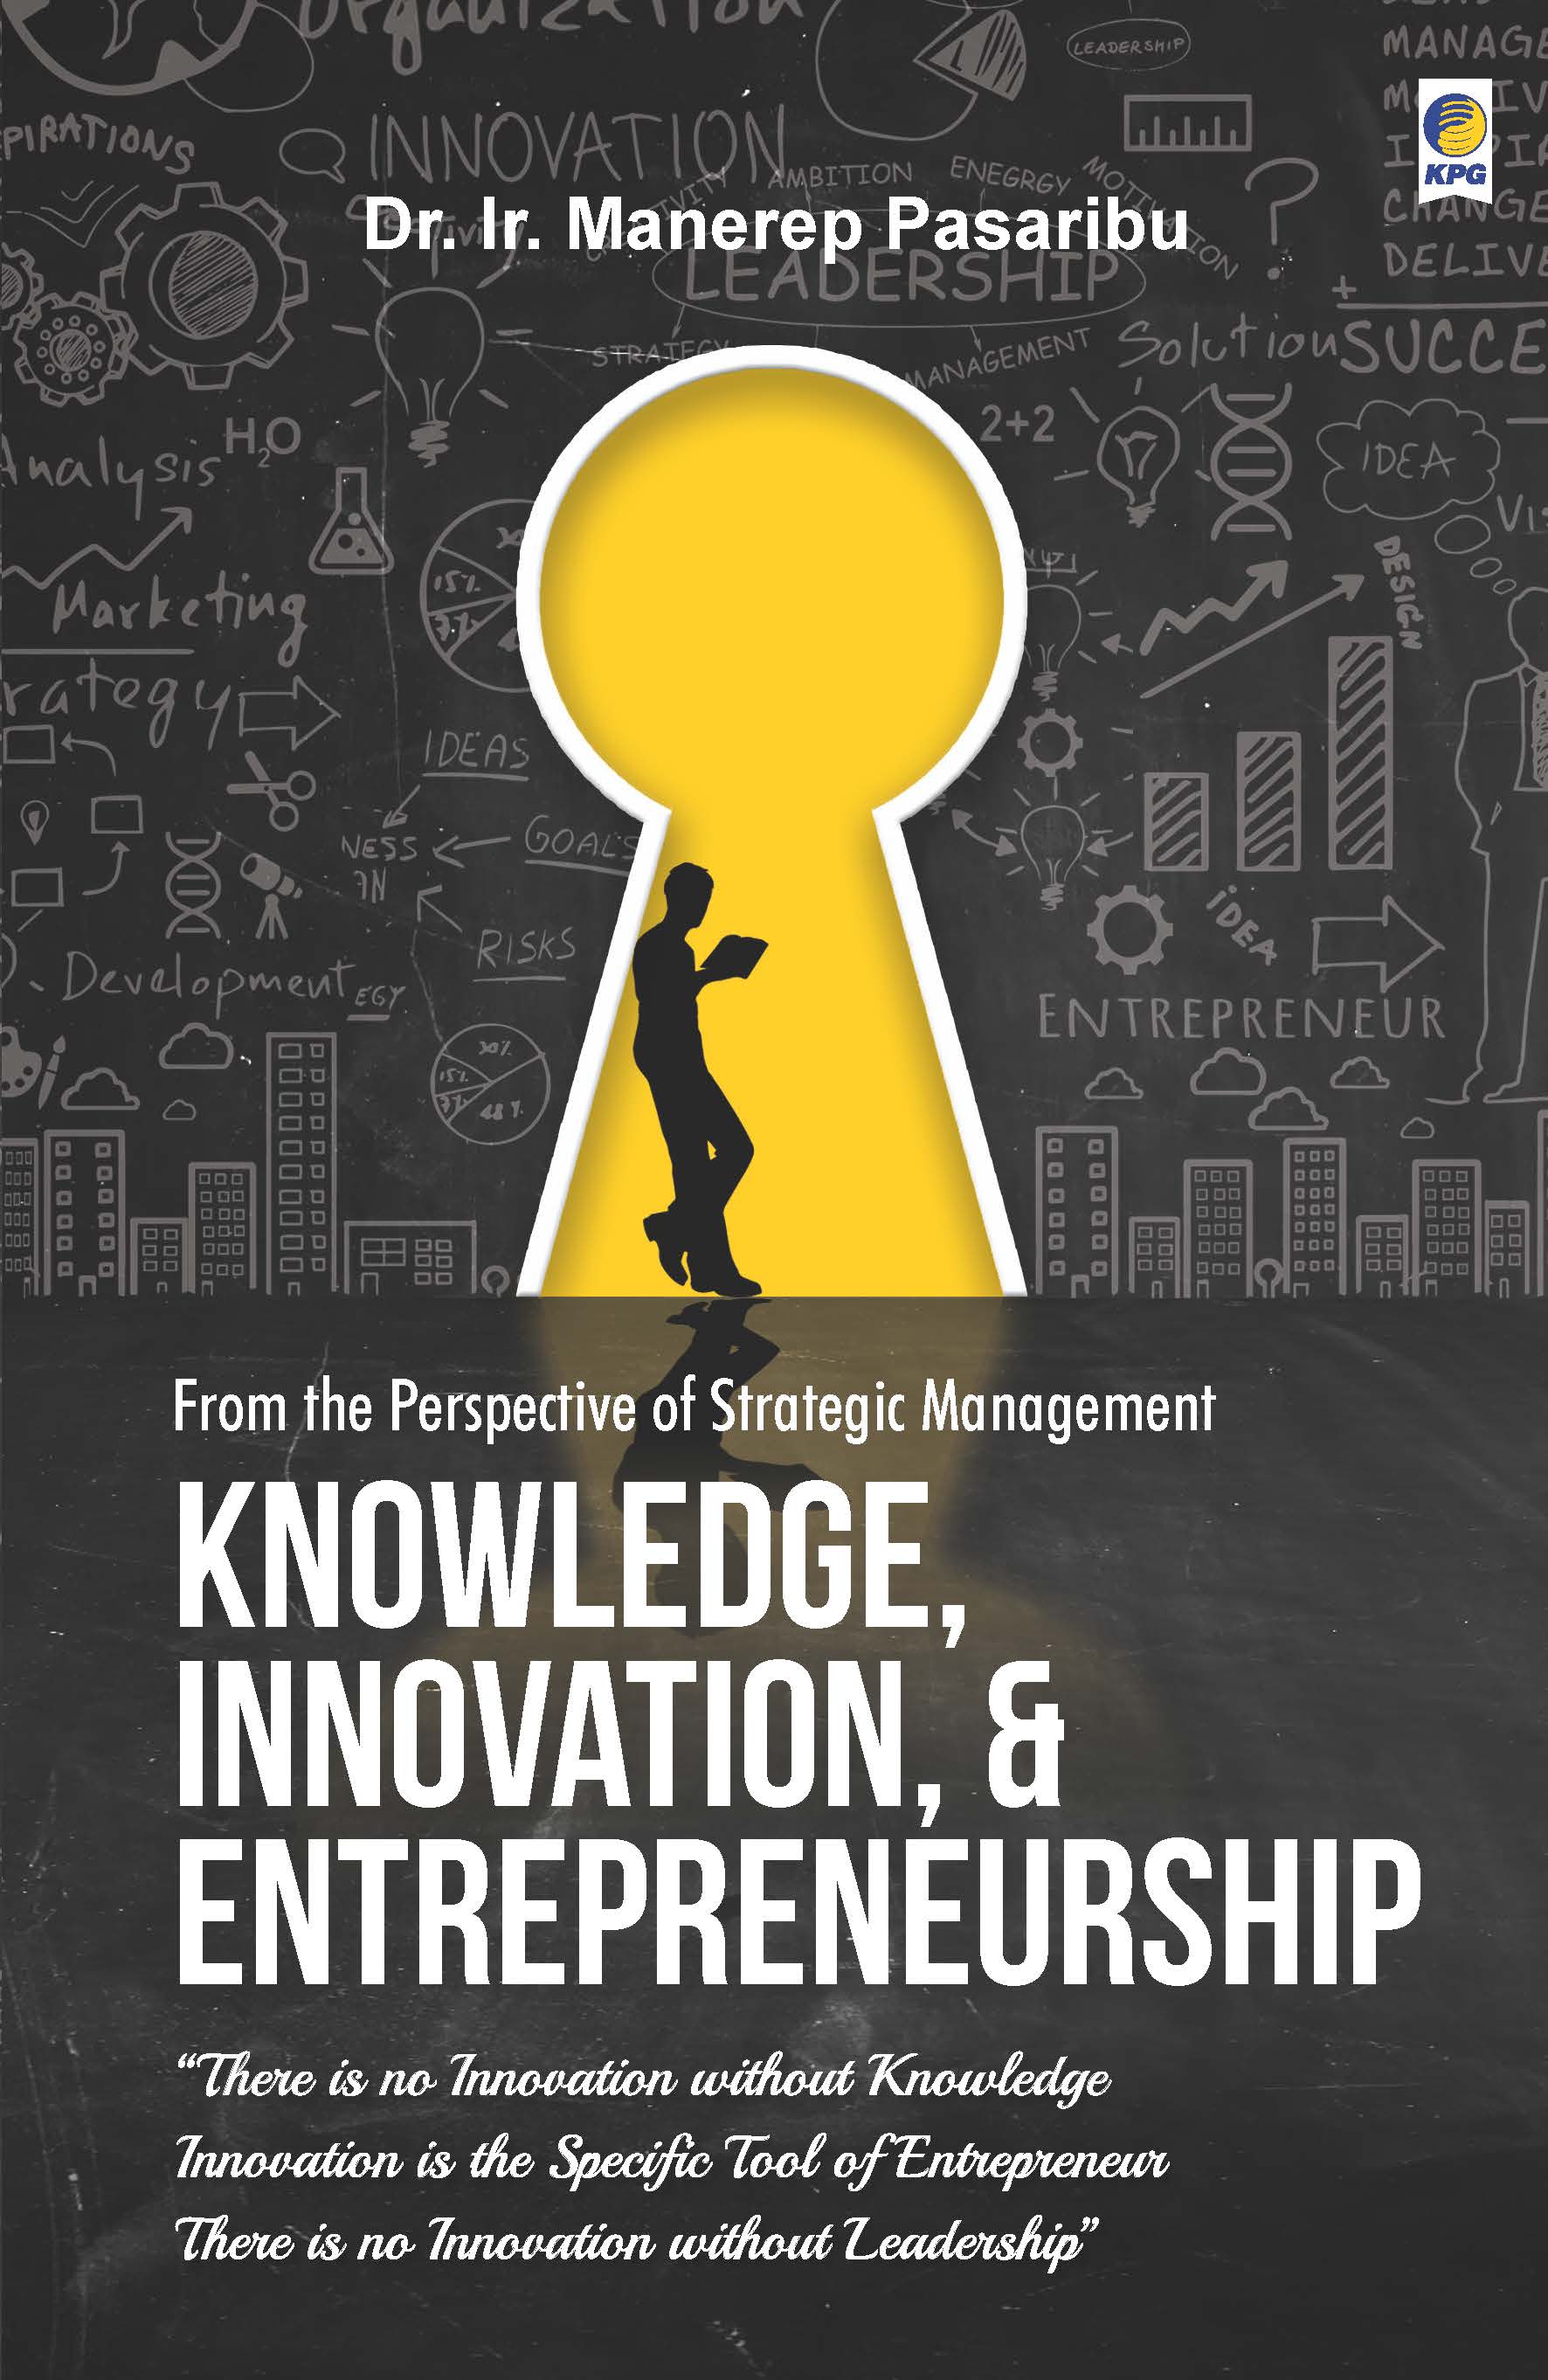 Knowledge, Inovation, & Entrepreneurship